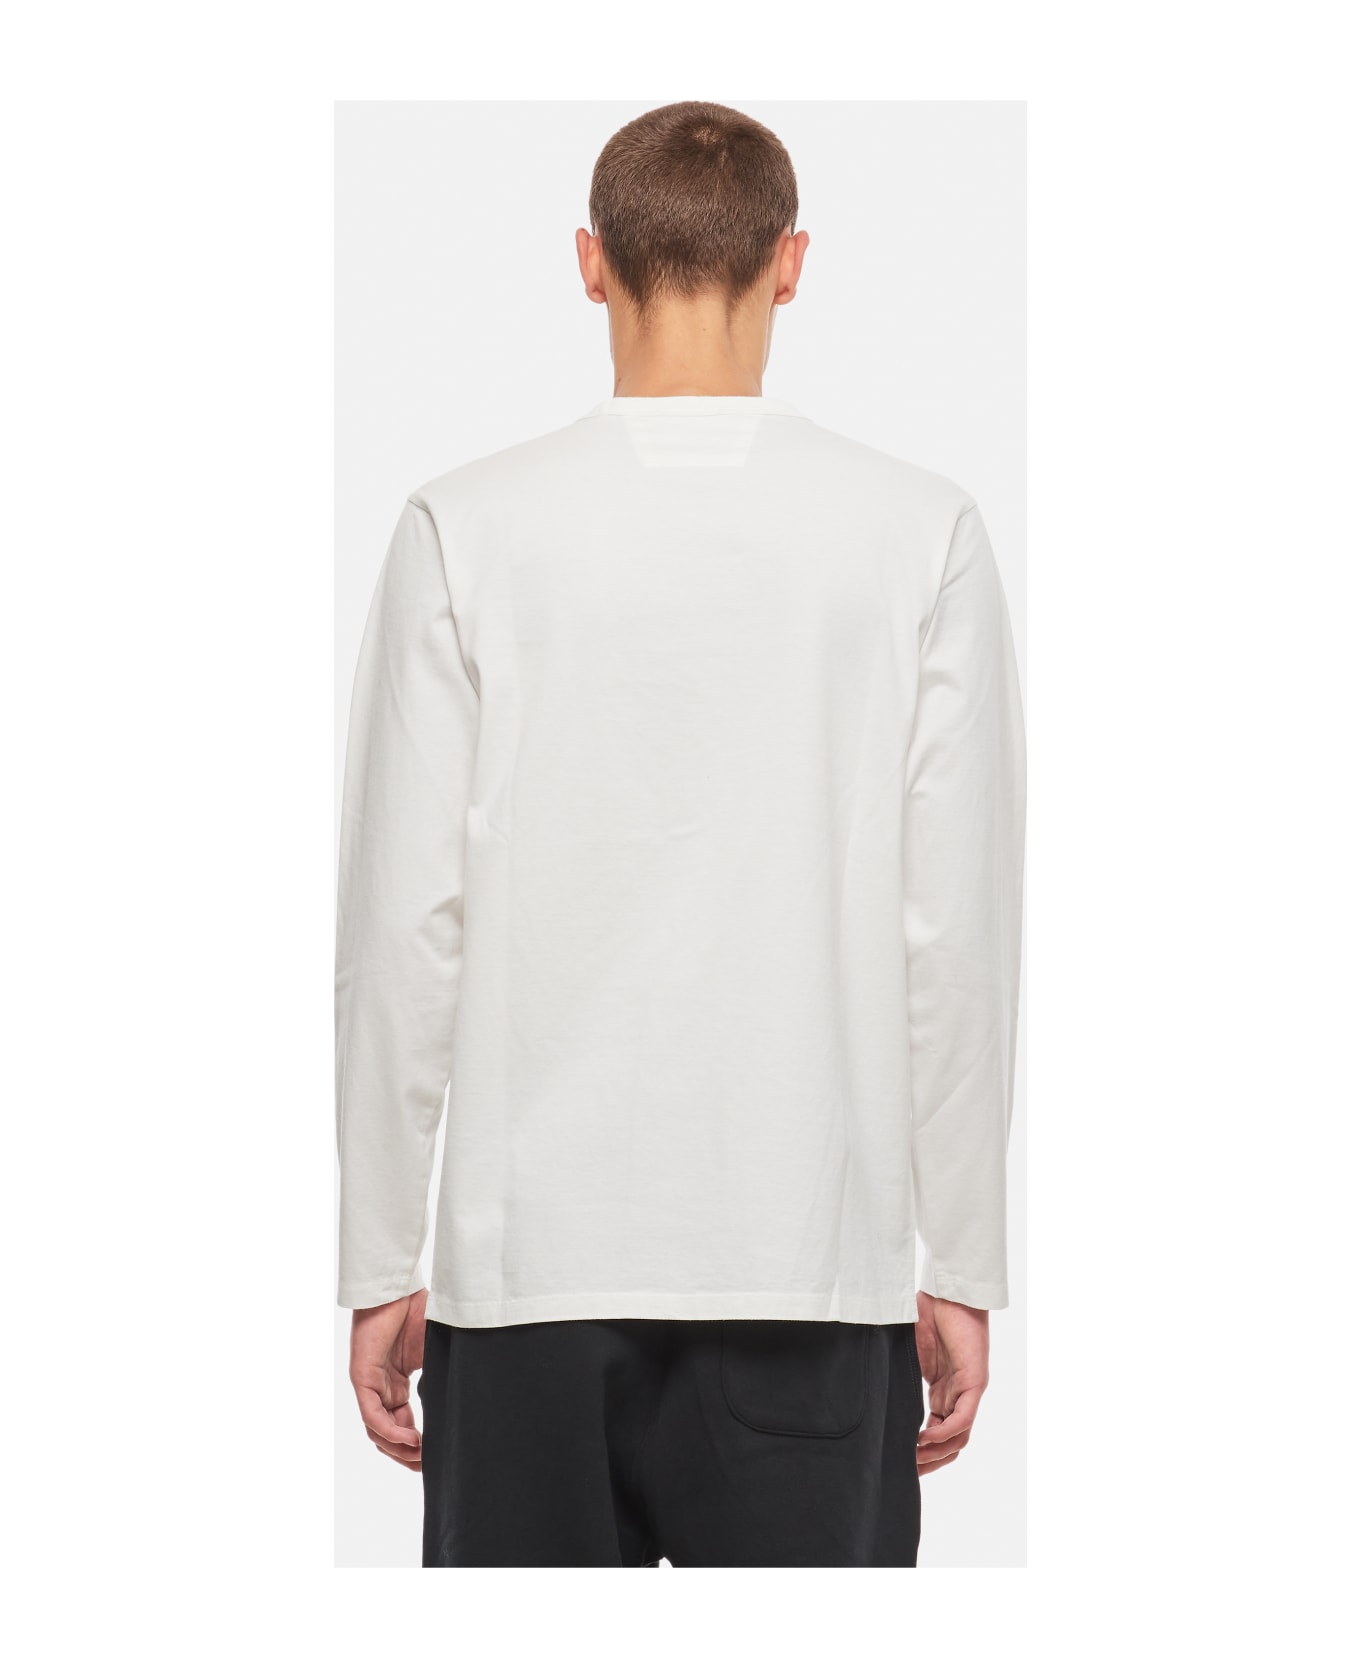 C.P. Company Long Sleeve Crewneck T-shirt - White フリース